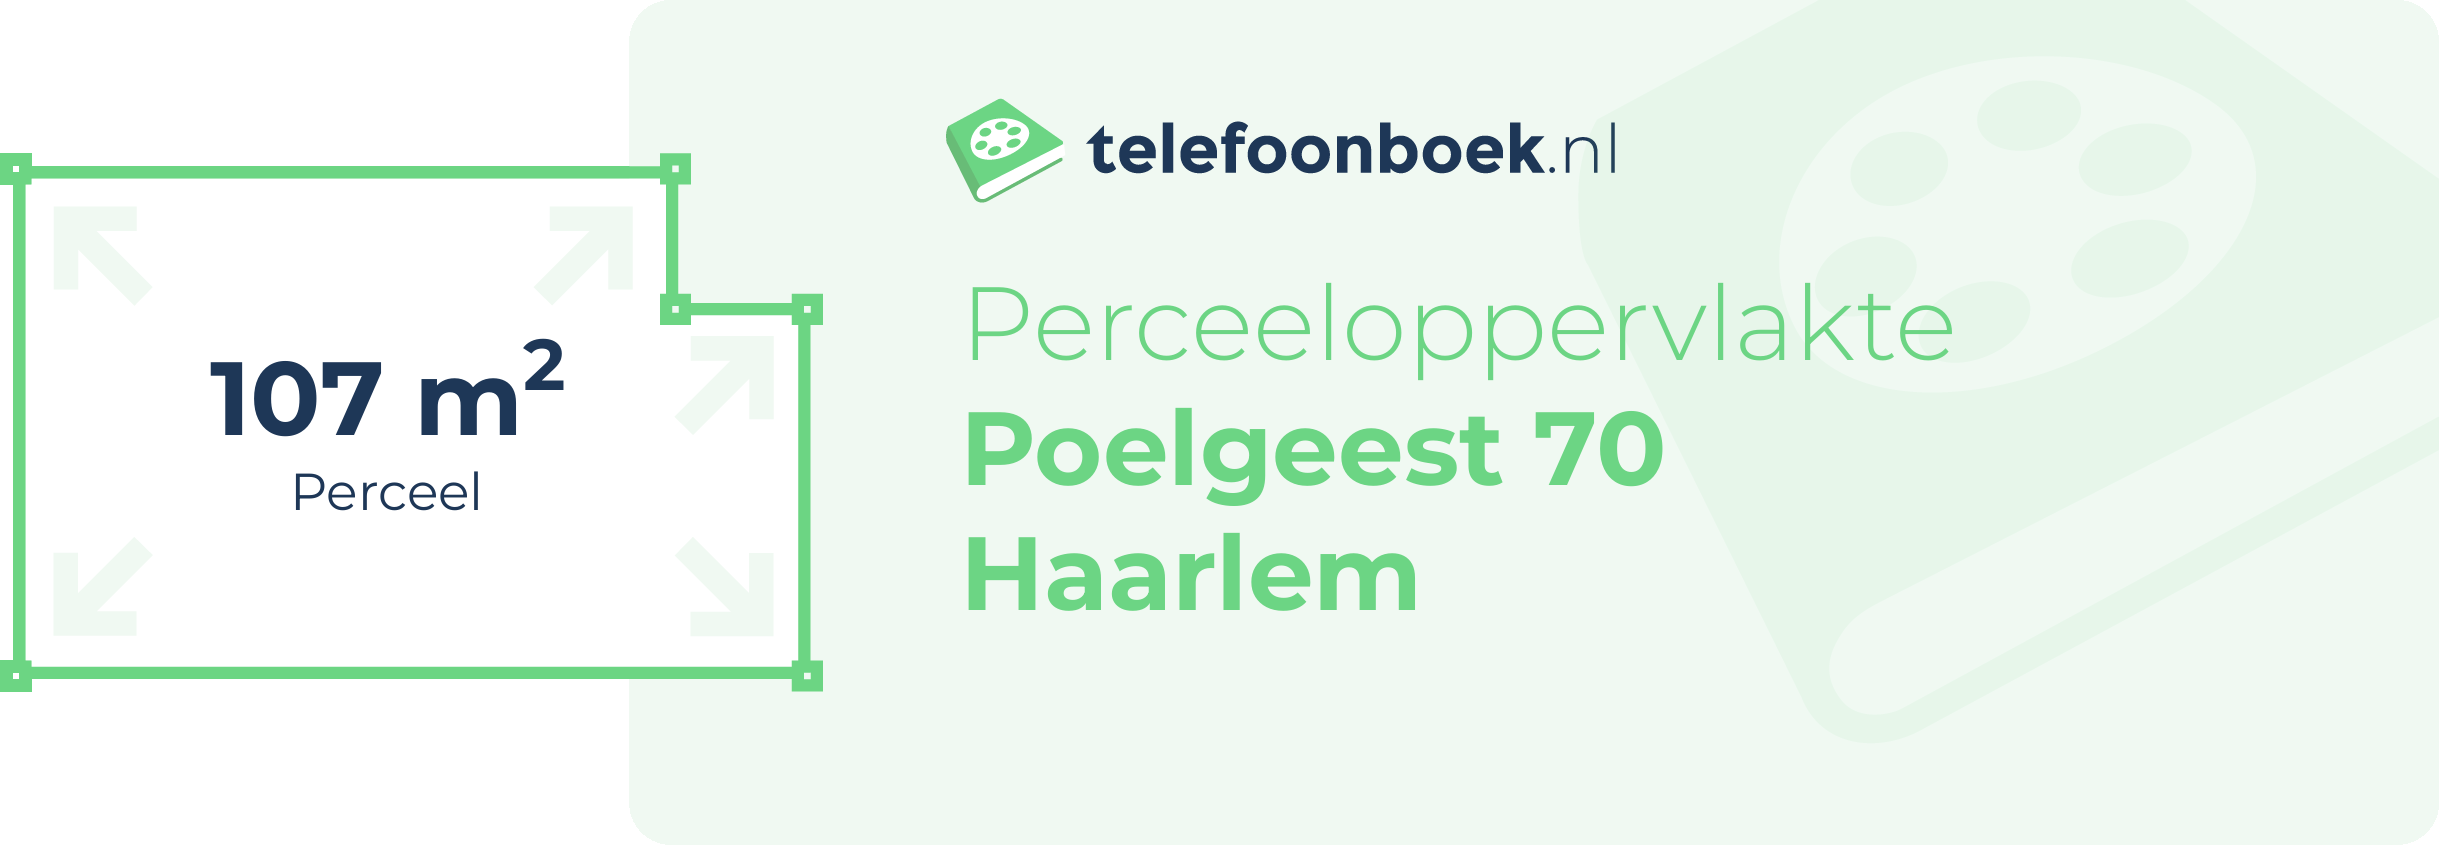 Perceeloppervlakte Poelgeest 70 Haarlem